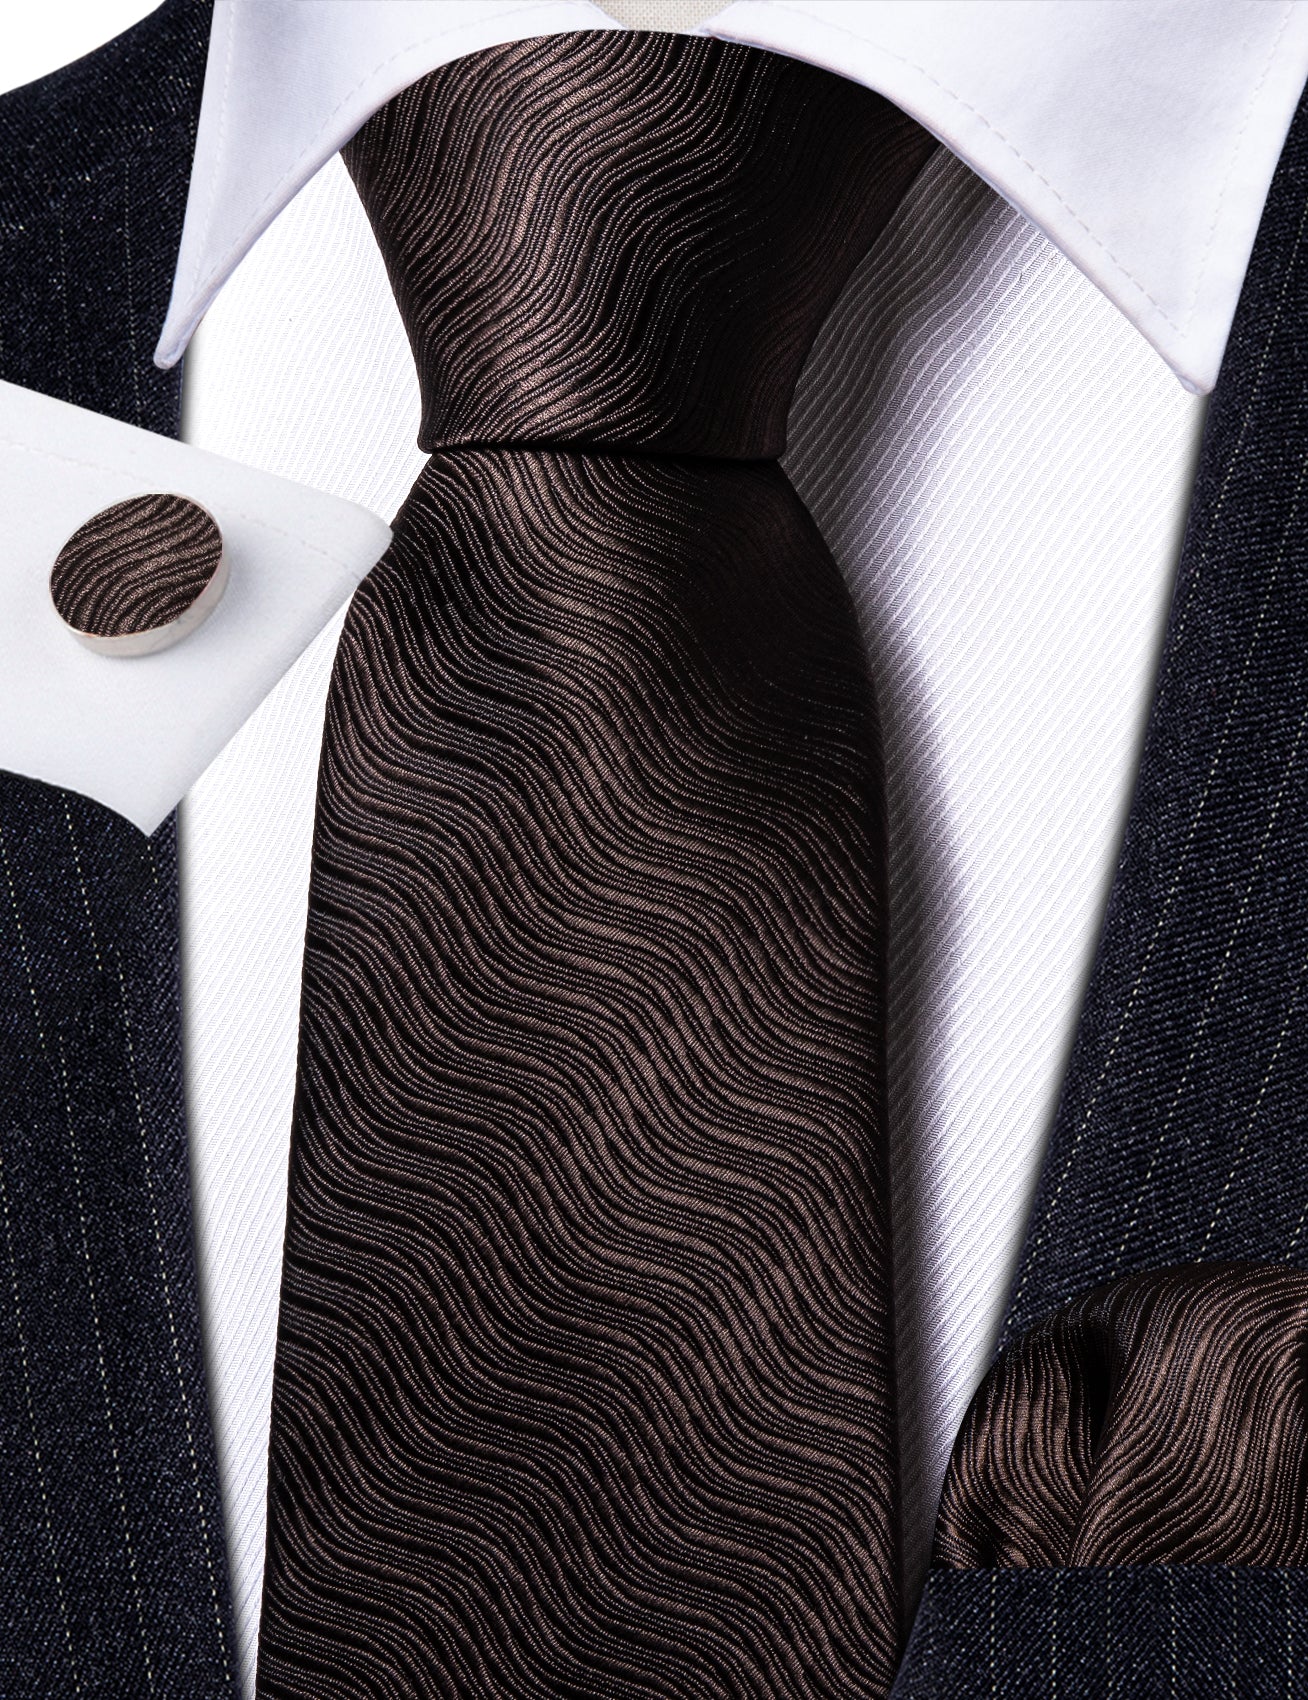 Brown Black Wavy Silk Tie Handkerchief Cufflinks Set For Men